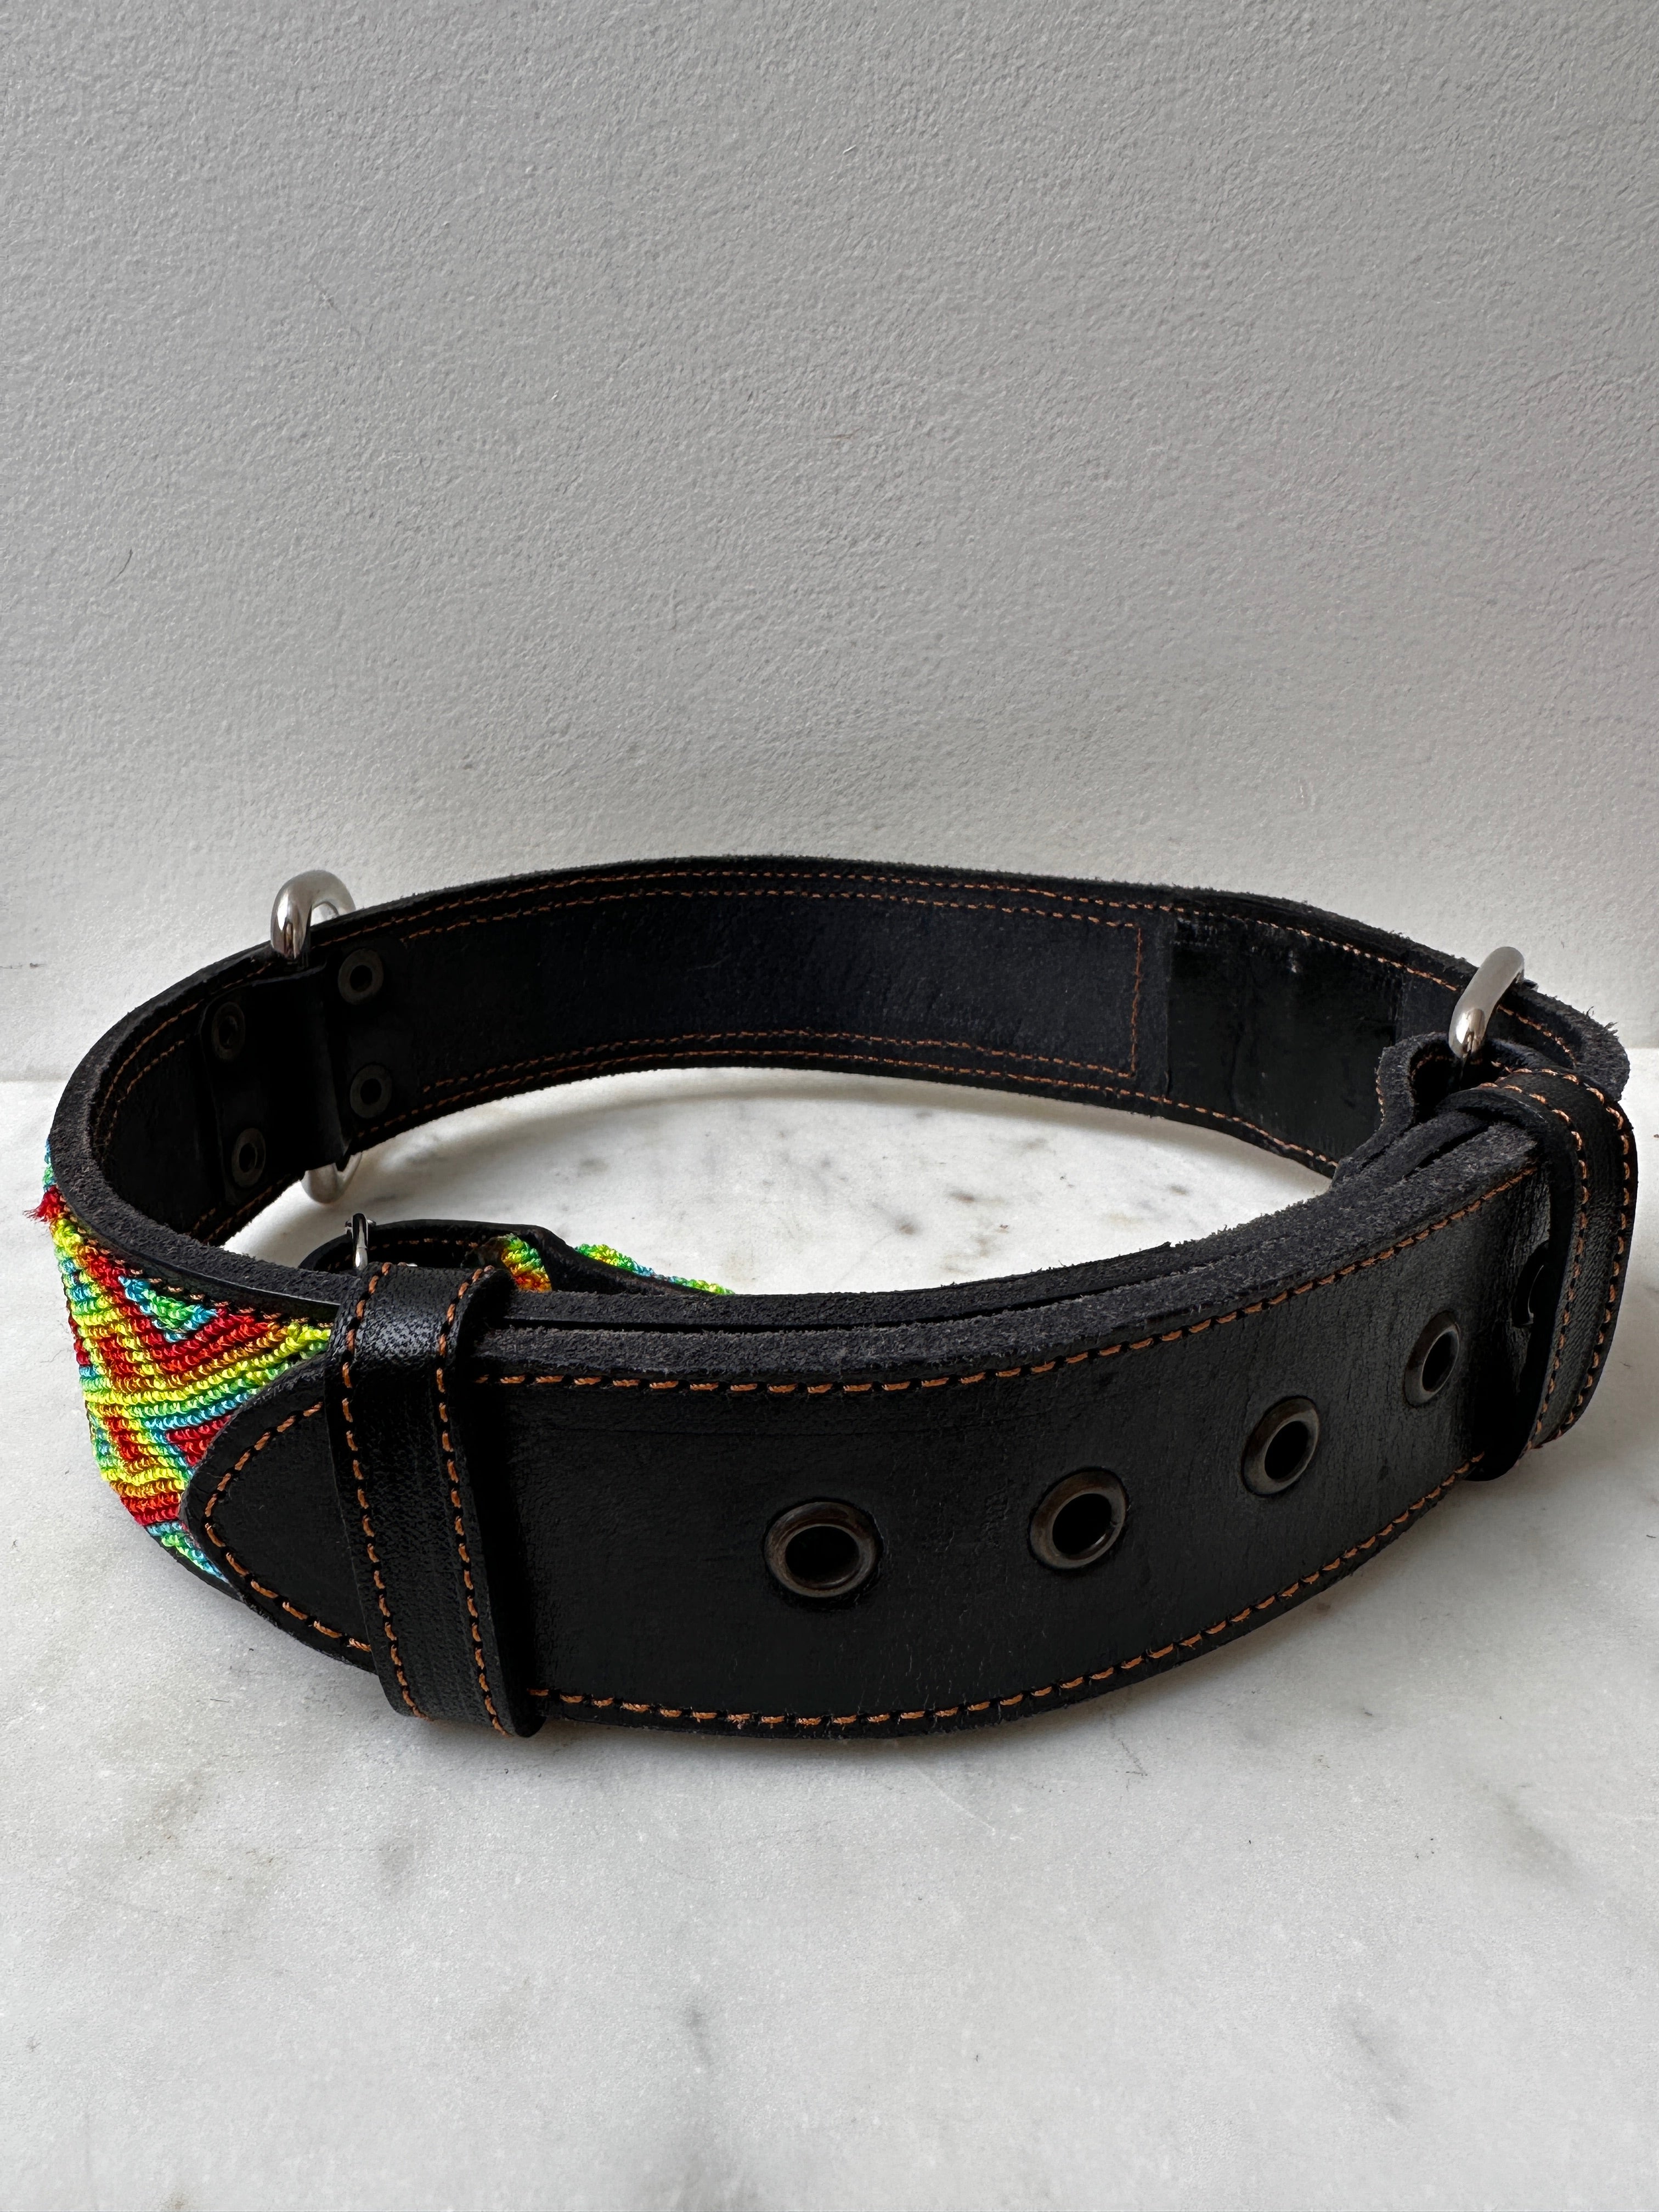 Future Nomads Homewares One Size Huichol Leather Wide Dog Collar XL6